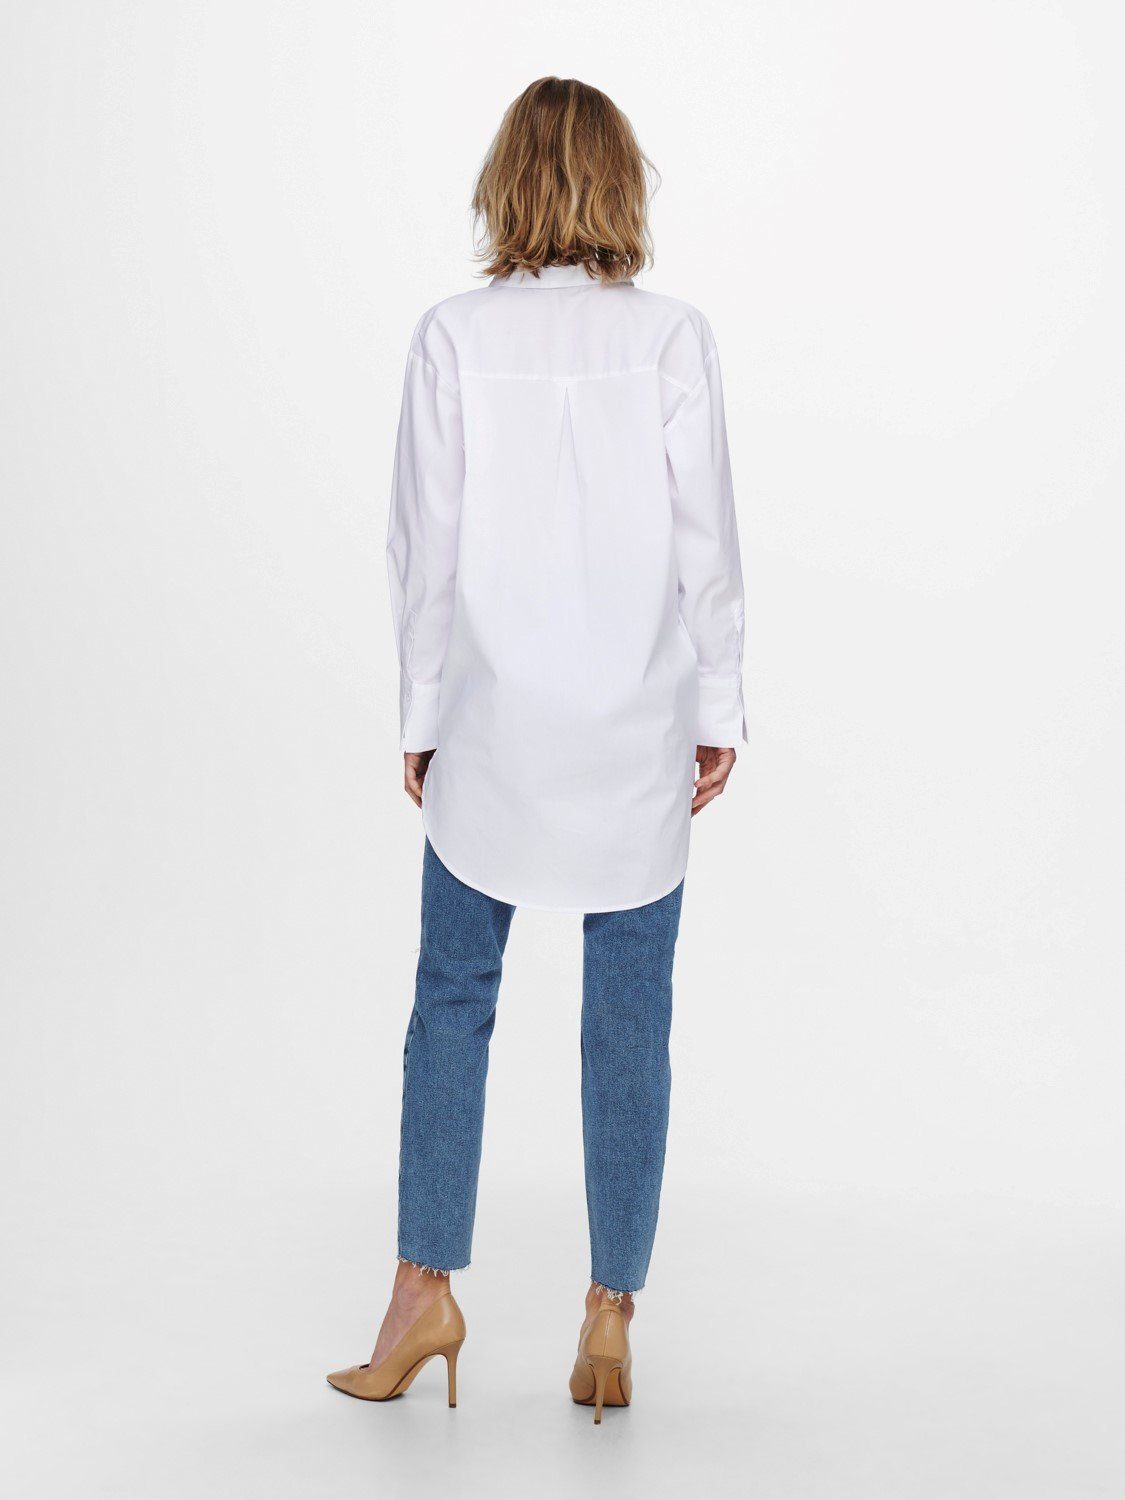 Freizeit Weiß Shirt de in Design JACQUELINE Bluse 3699 YONG (1-tlg) Blusenshirt Hemd JDY